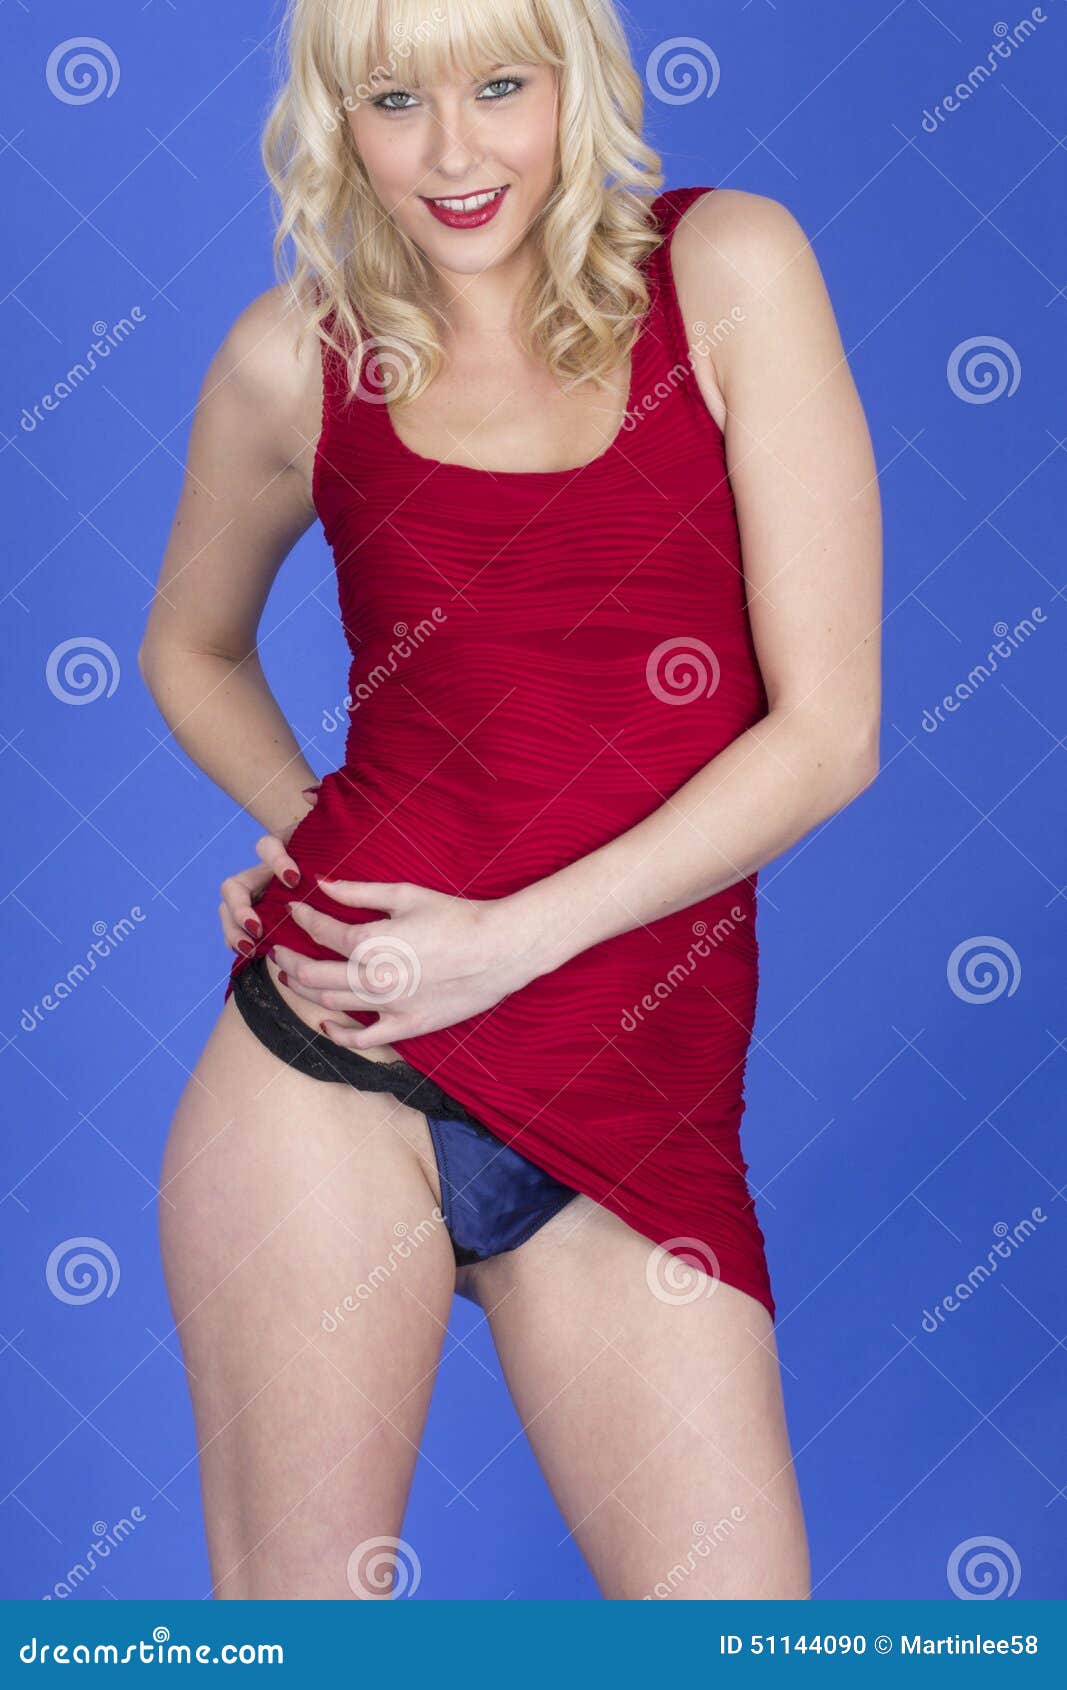 https://thumbs.dreamstime.com/z/young-pin-up-model-posing-flashing-knickers-panties-red-mini-dress-sexy-51144090.jpg